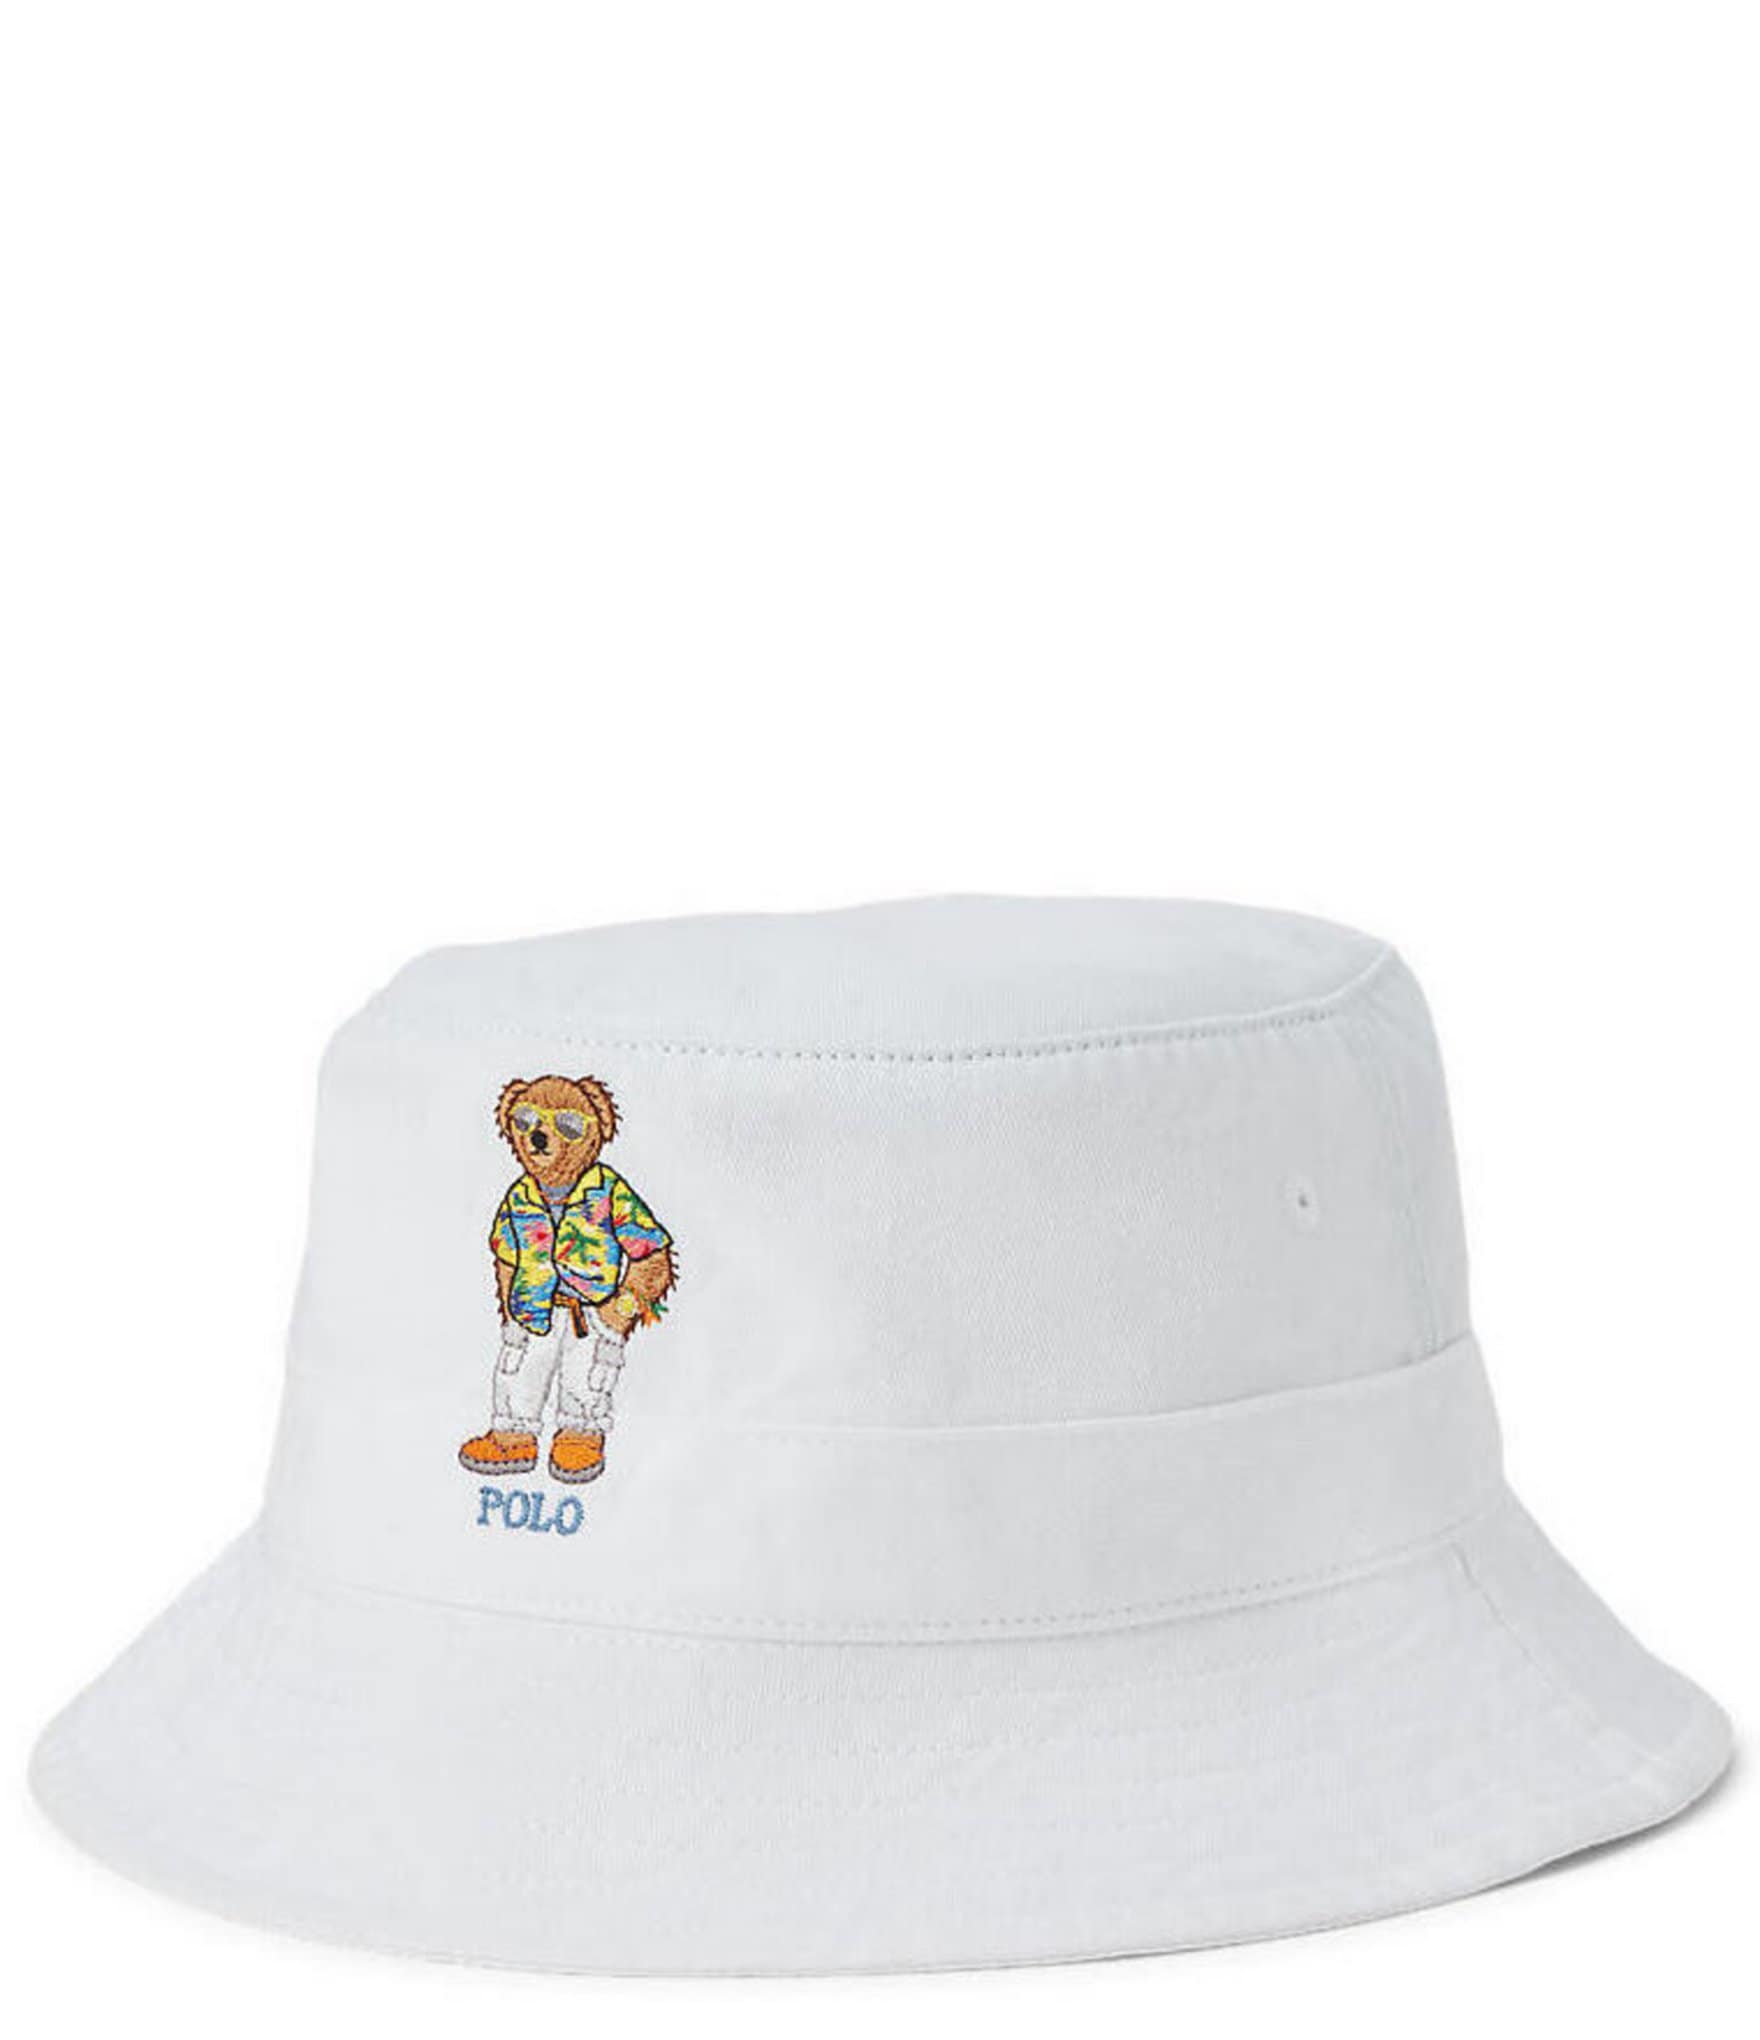 Sun Hat - Bucket Hat - Baby to Men's XL # 118